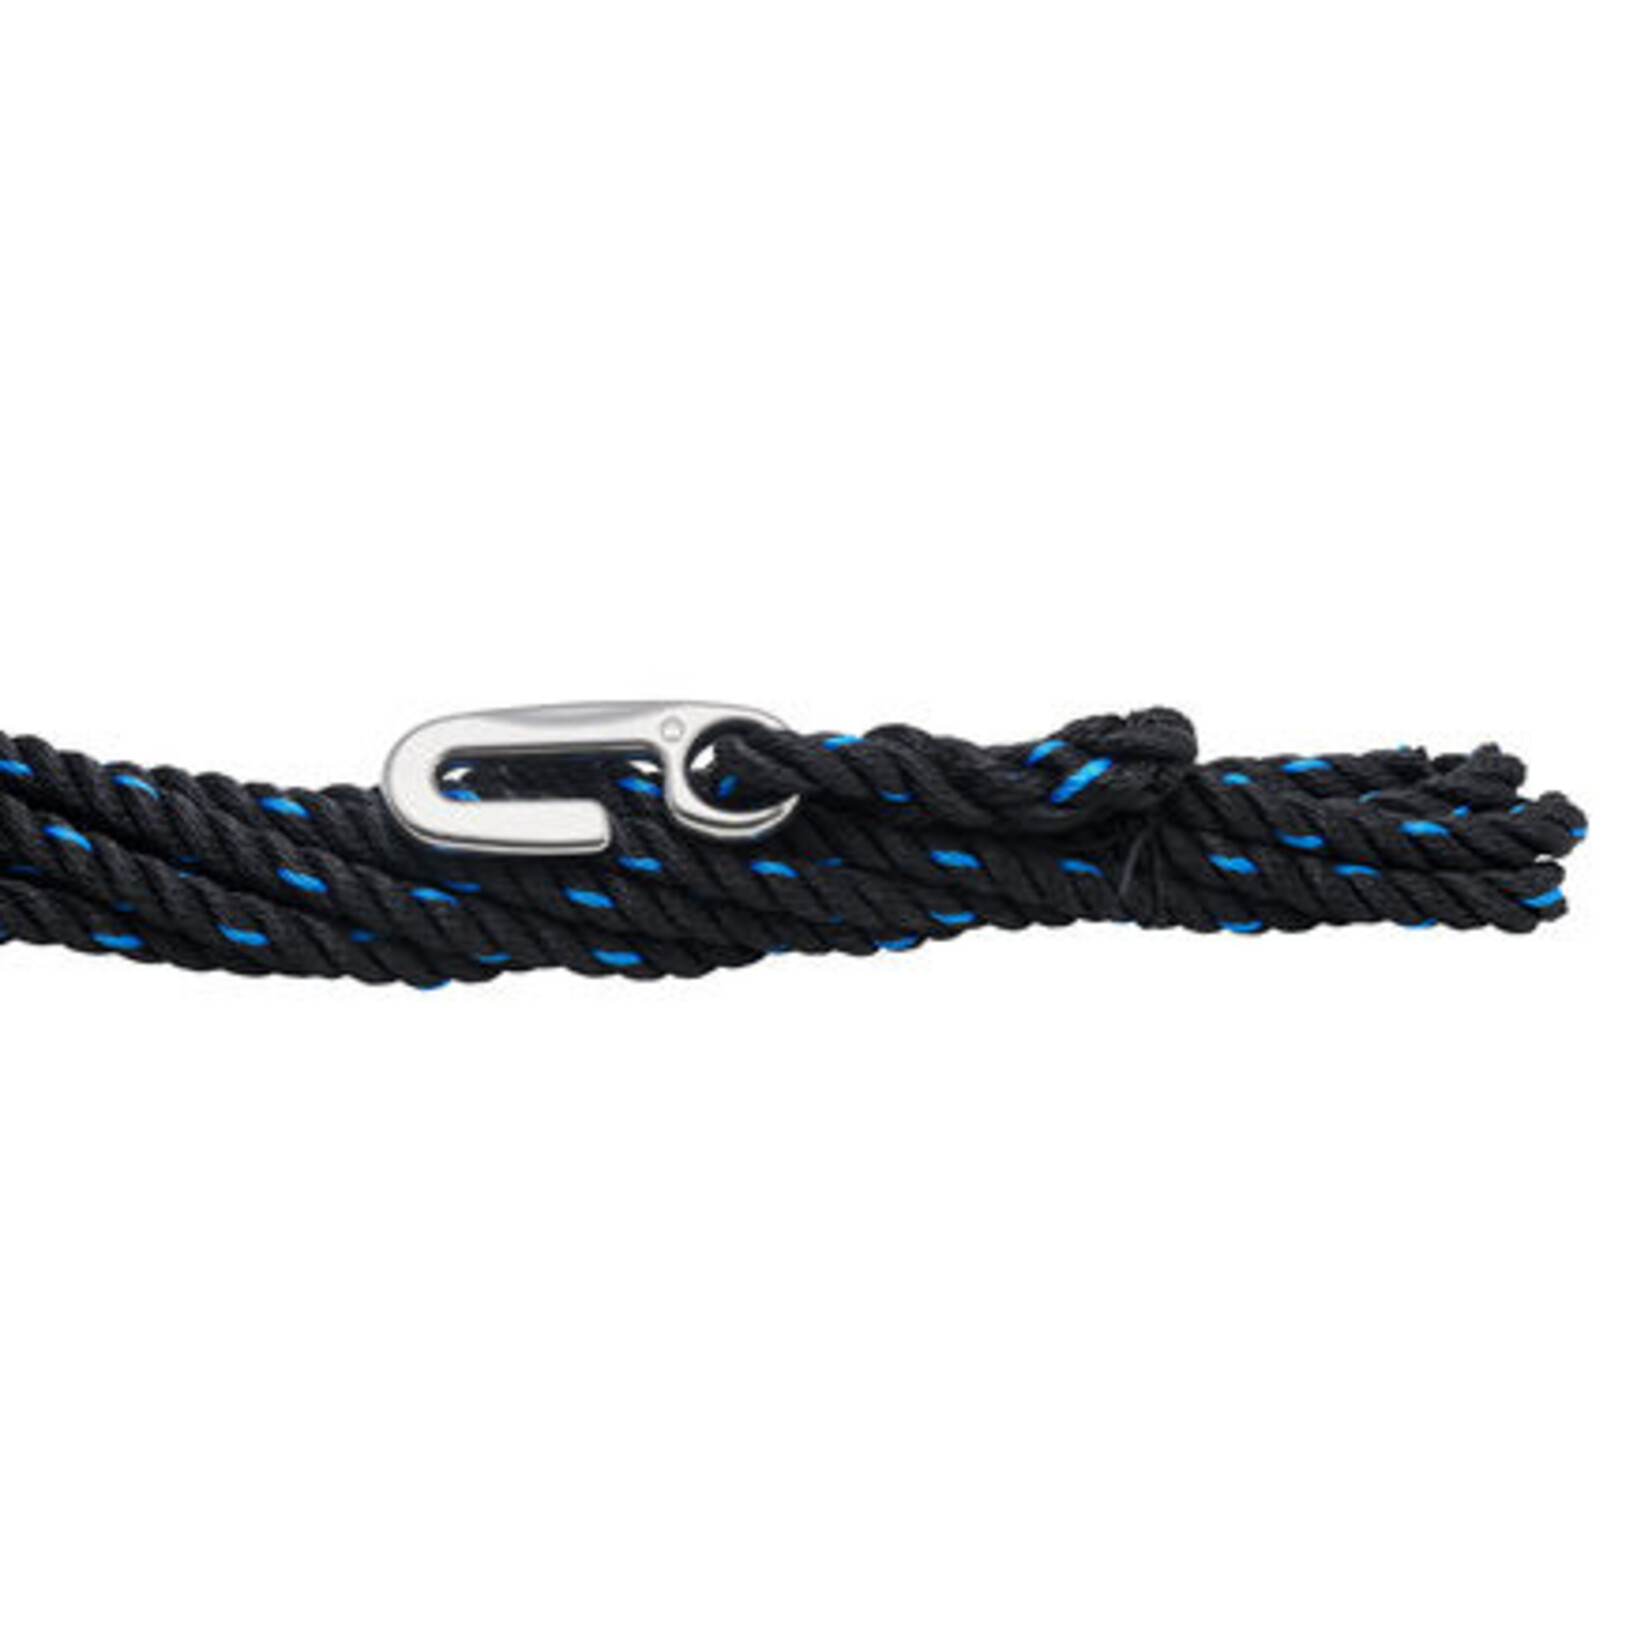 Wichard Chain grip kit 2996 - Rope 16 mm - Length 6m